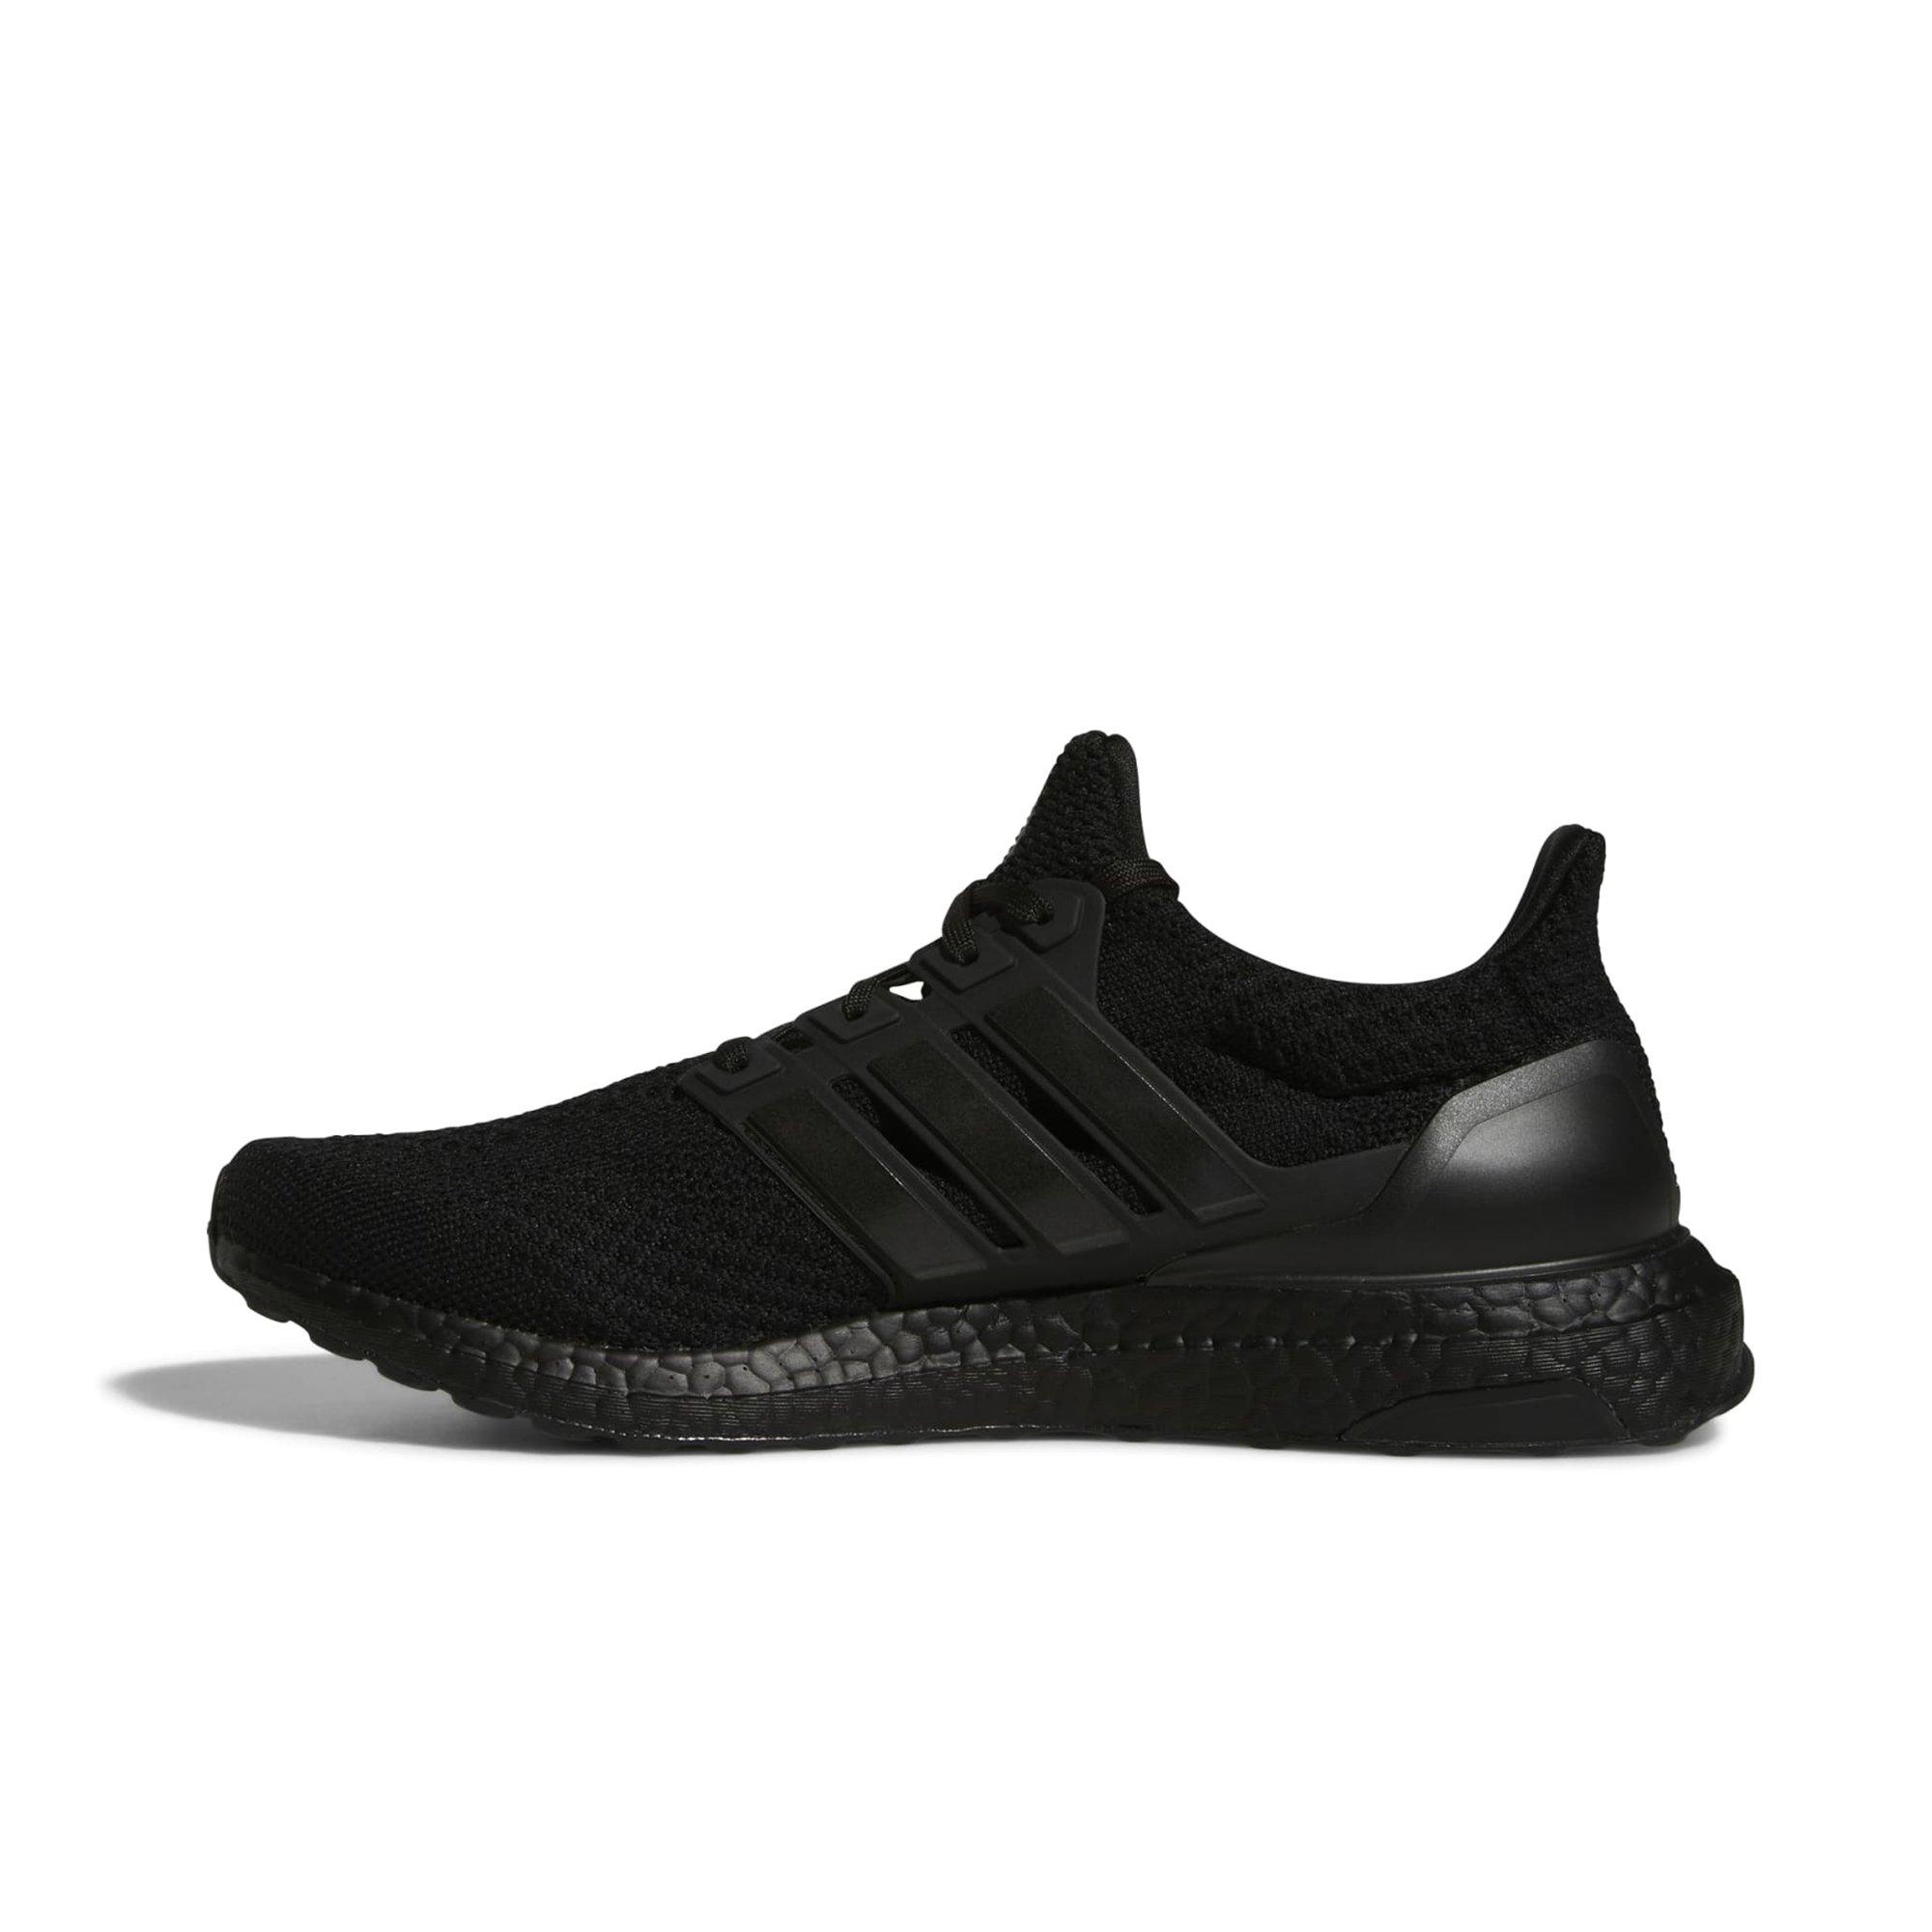 adidas 5.0 DNA "Black/Black" Men's Running Shoe